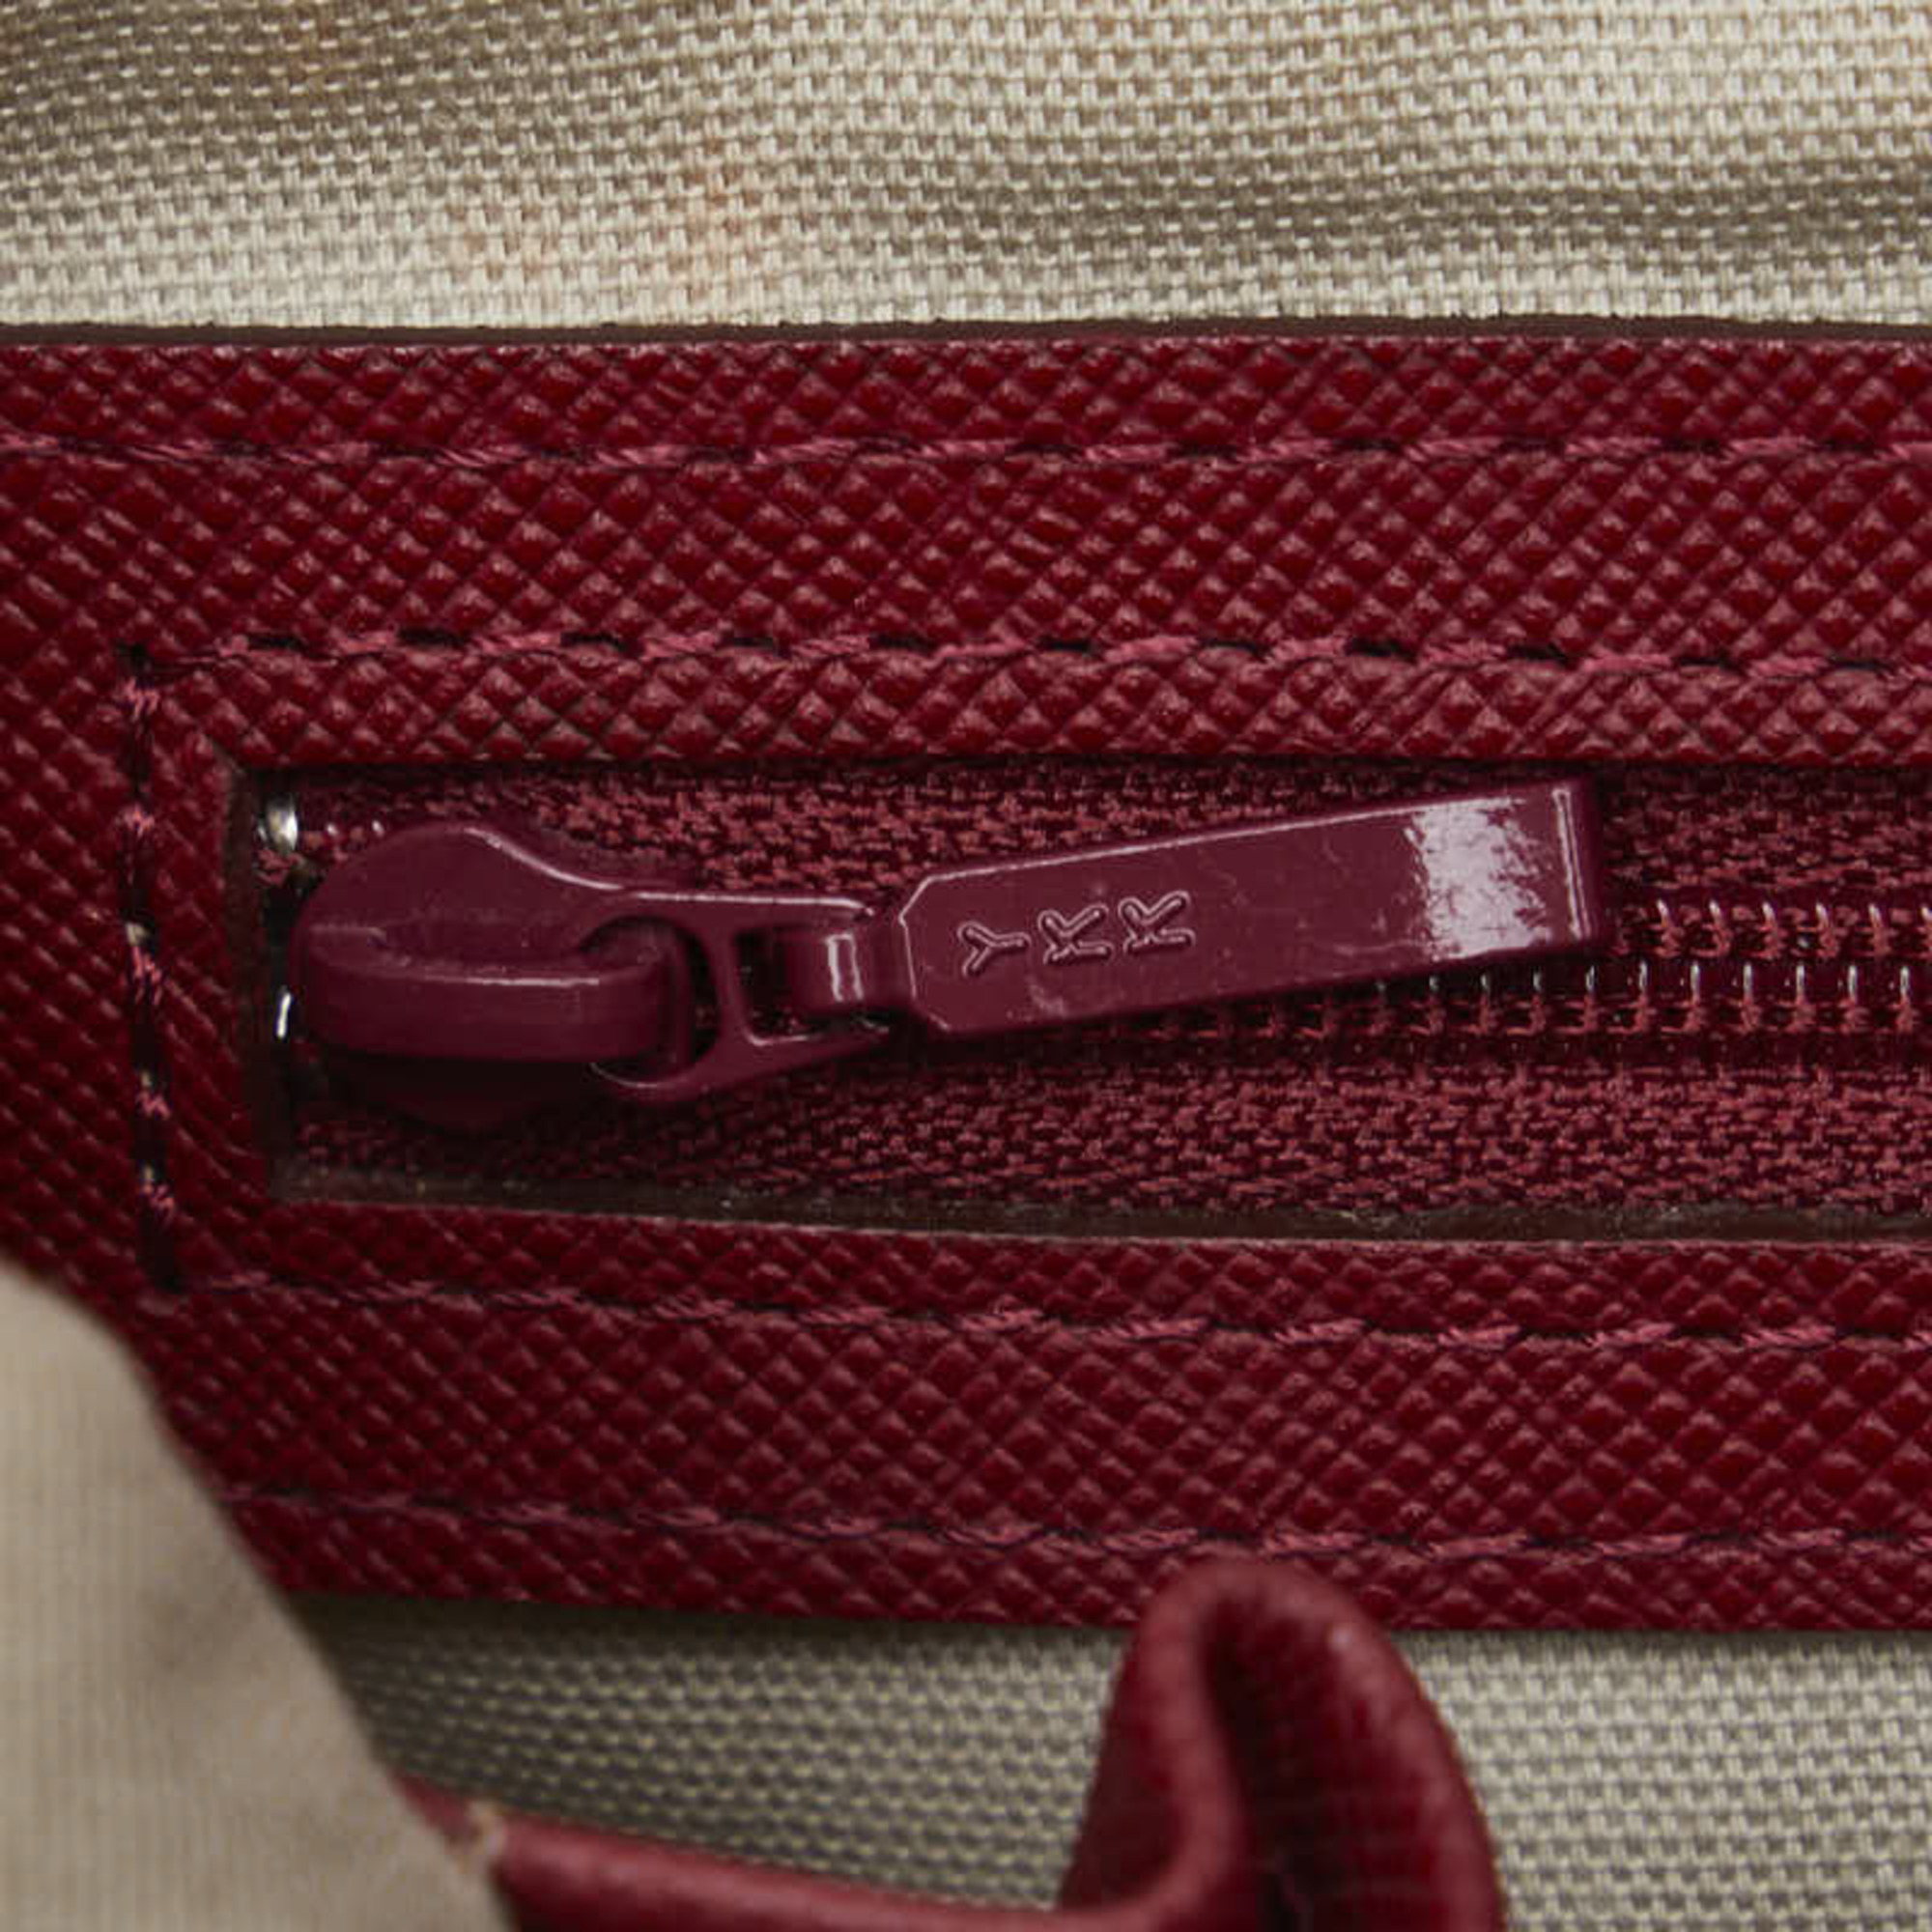 Burberry Nova Check Shoulder Bag Beige Red Canvas Leather Women's BURBERRY